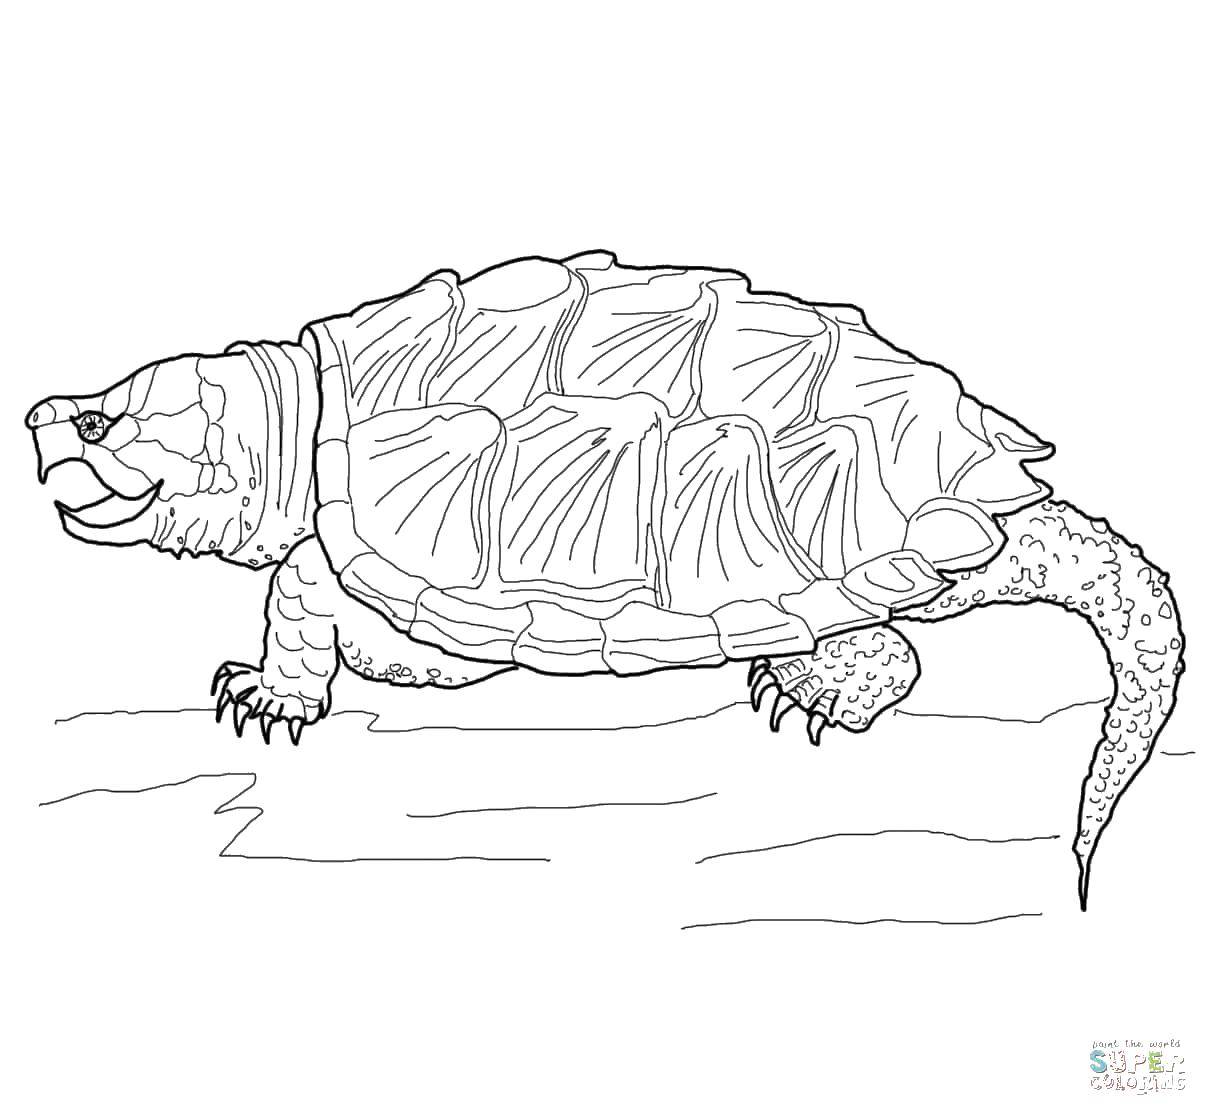 Coloring Terrible turtle. Category teenage mutant ninja turtles. Tags:  Reptile, turtle.